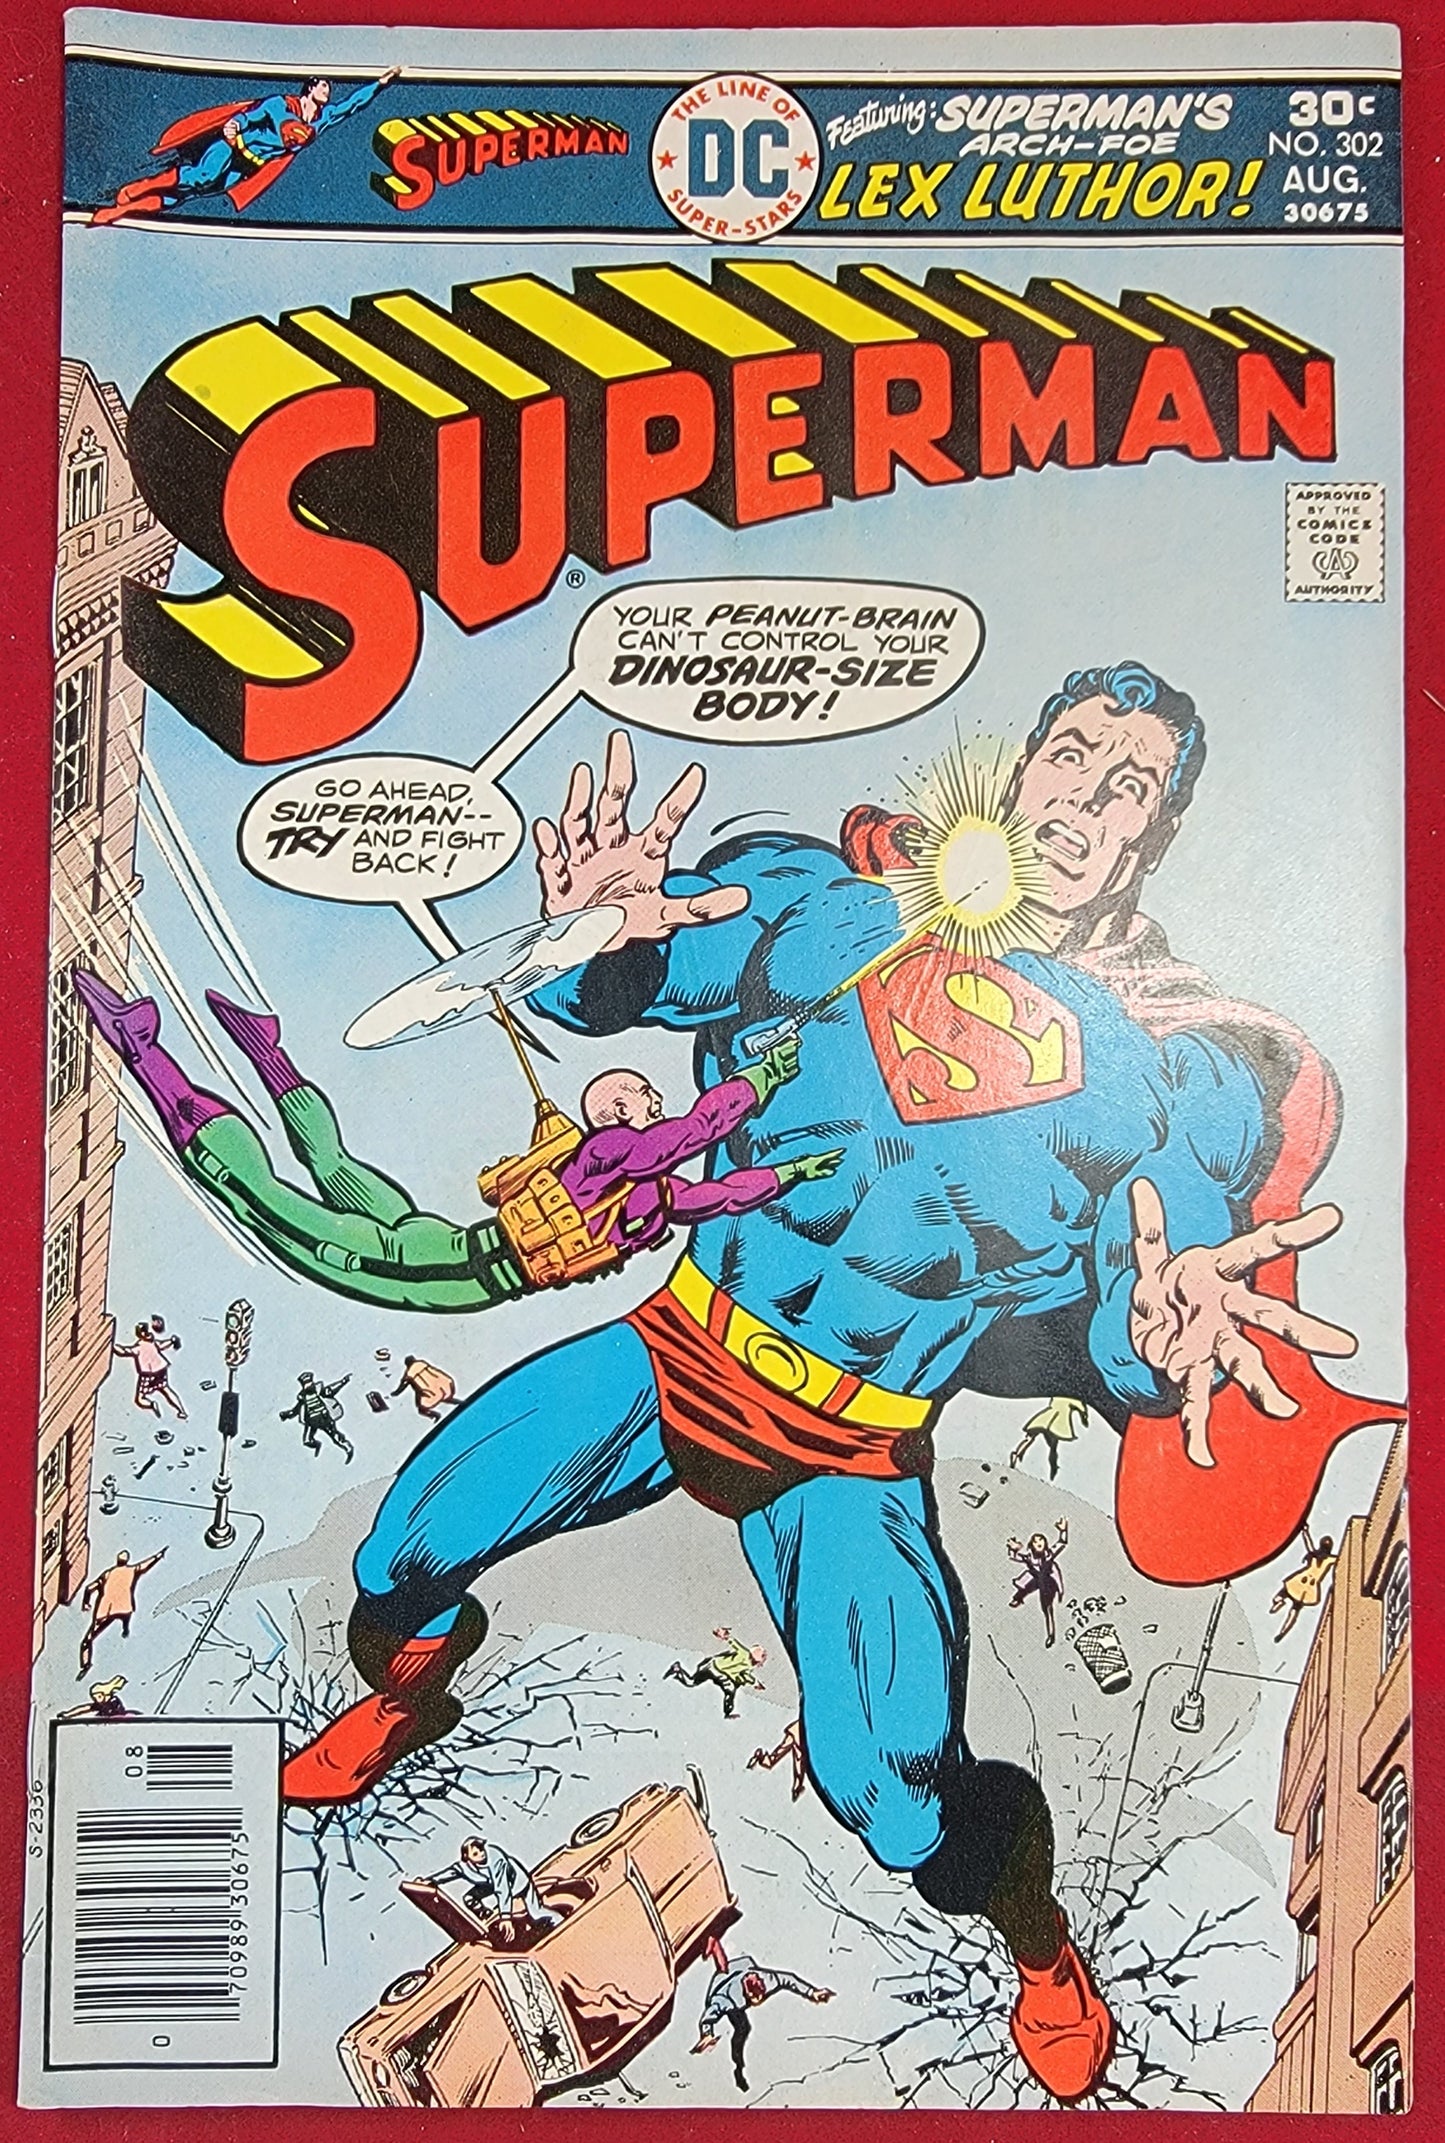 Superman comic # 302 (1976)